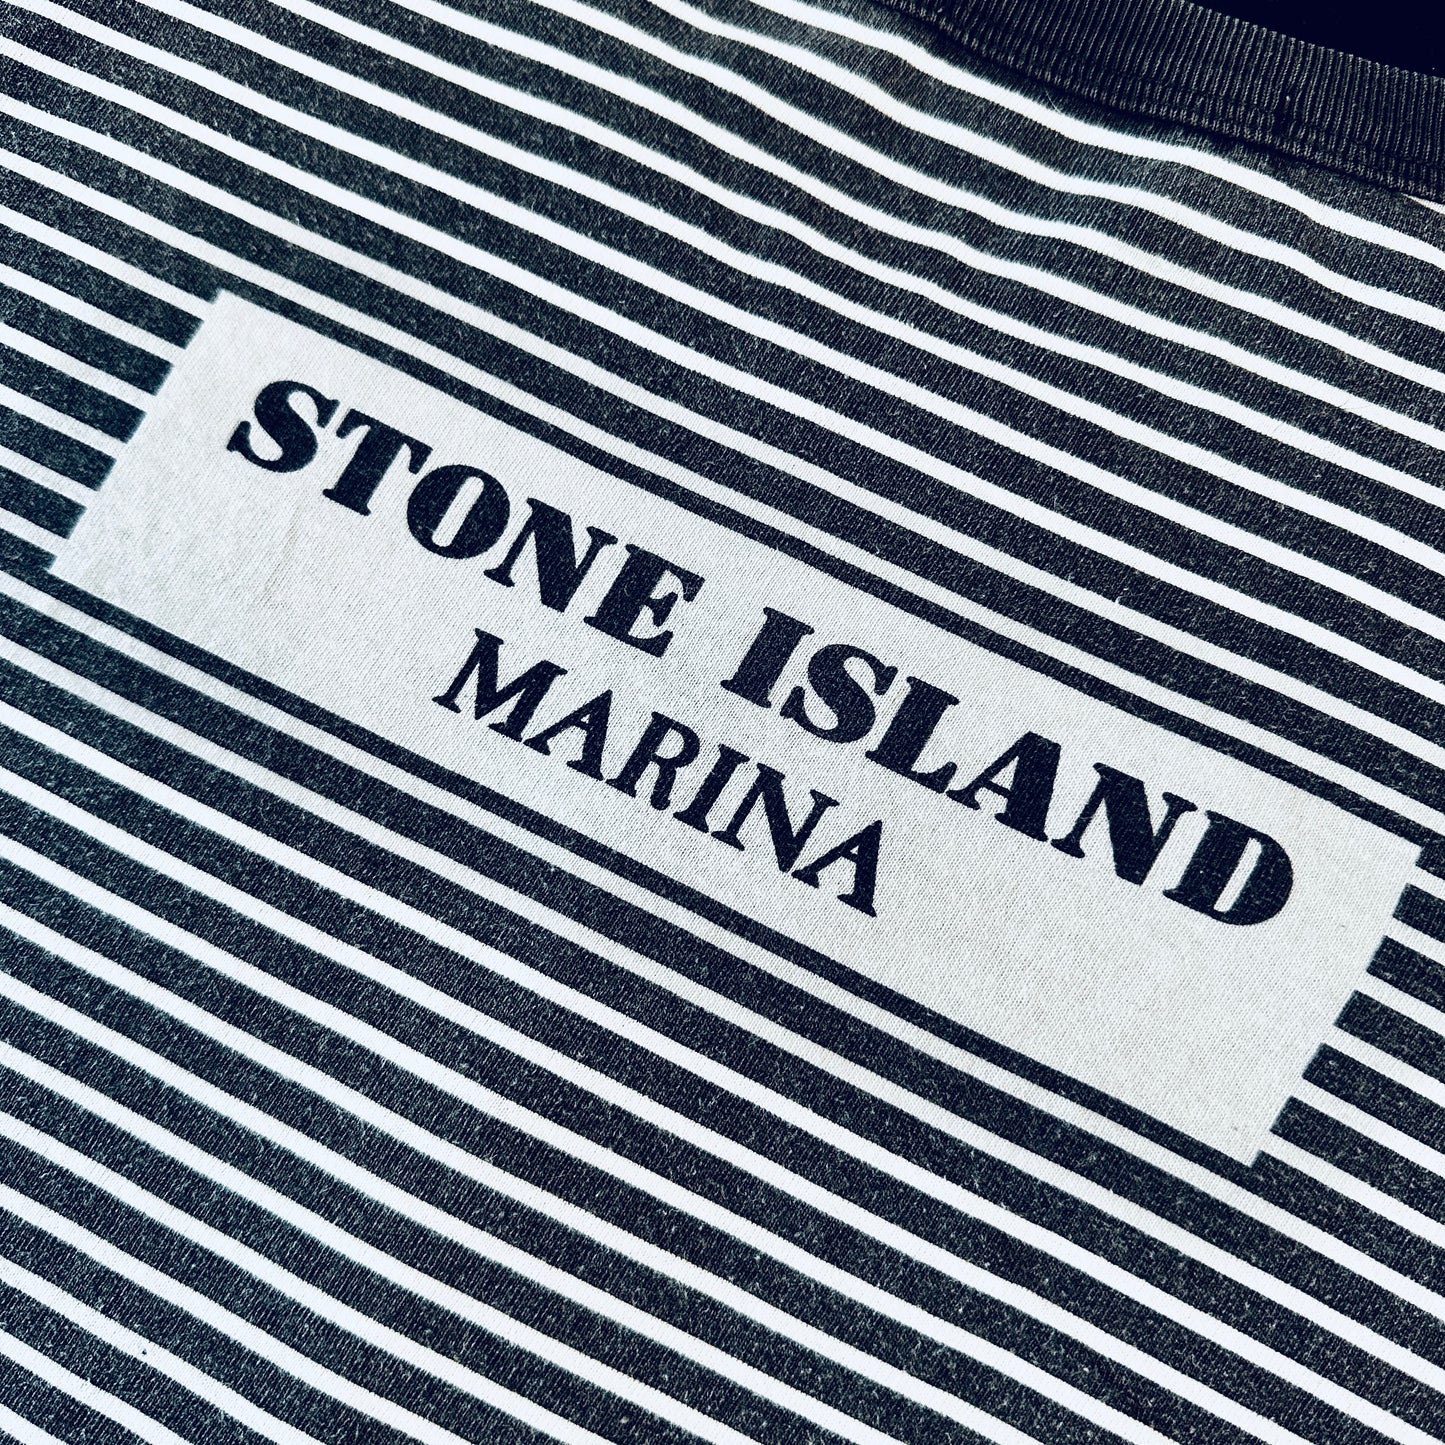 Stone Island Marina 2019 Charcoal Longsleeve T-Shirt - M